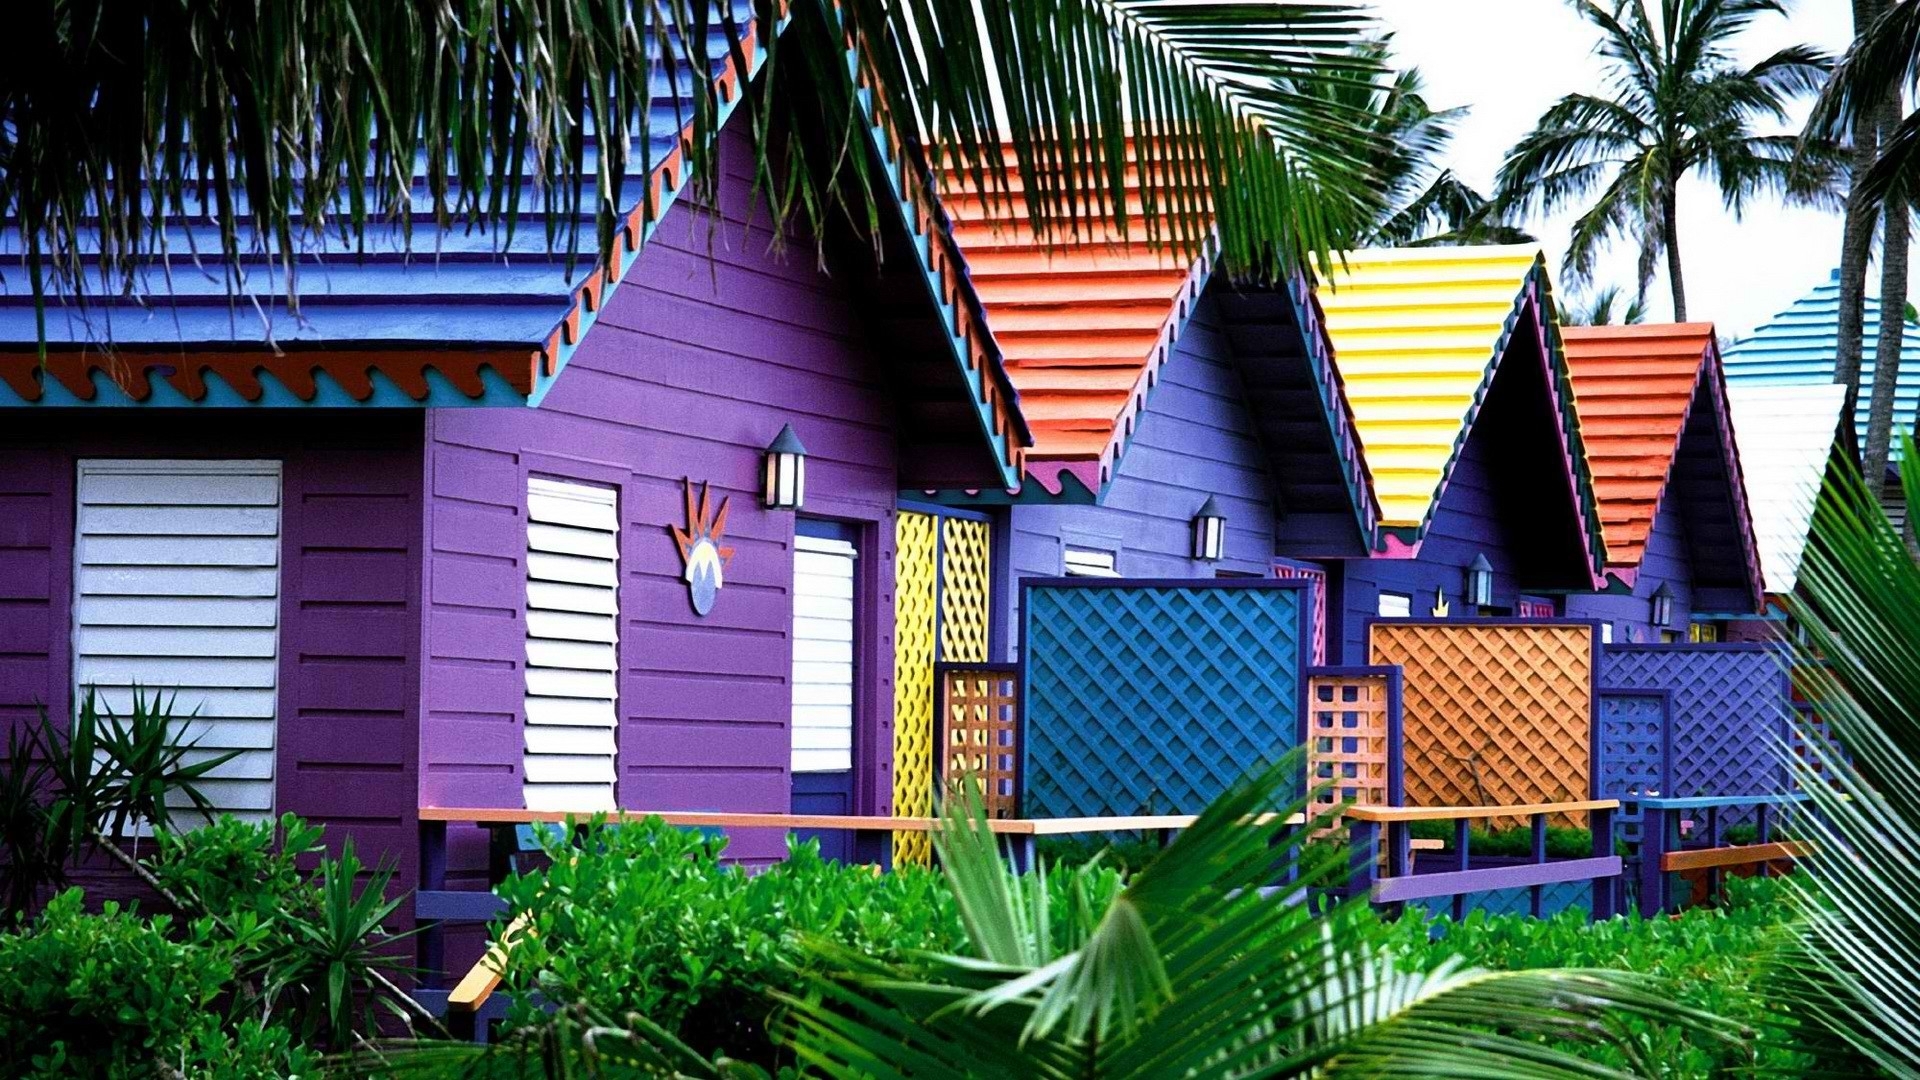 Colorful houses. Яркие домики. Яркие цвета домов. Разноцветные домики. Разноцветный дом.